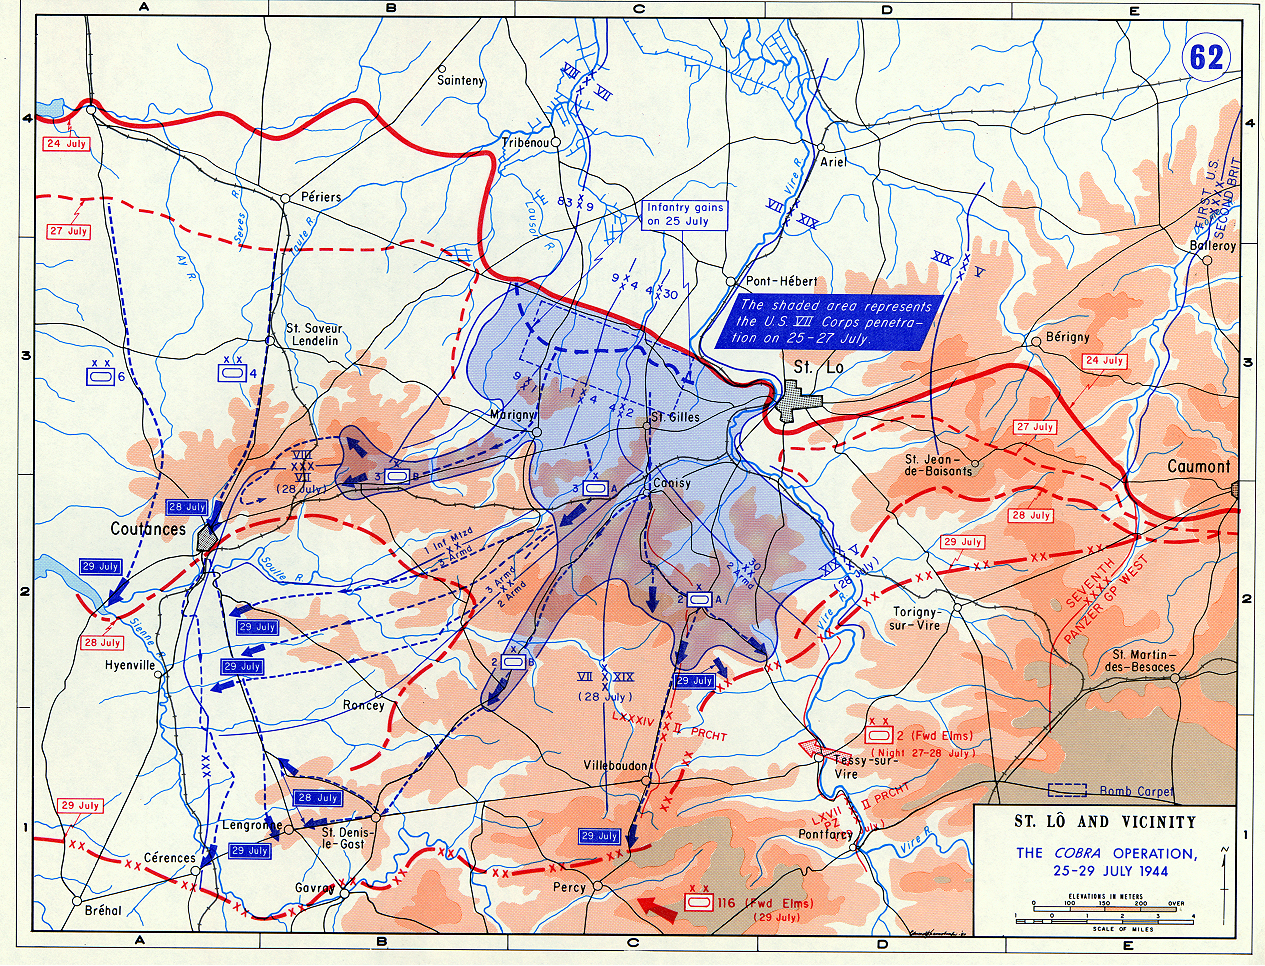 Saint Lo and Vicinity - Operation Cobra - 25-29 July 1944